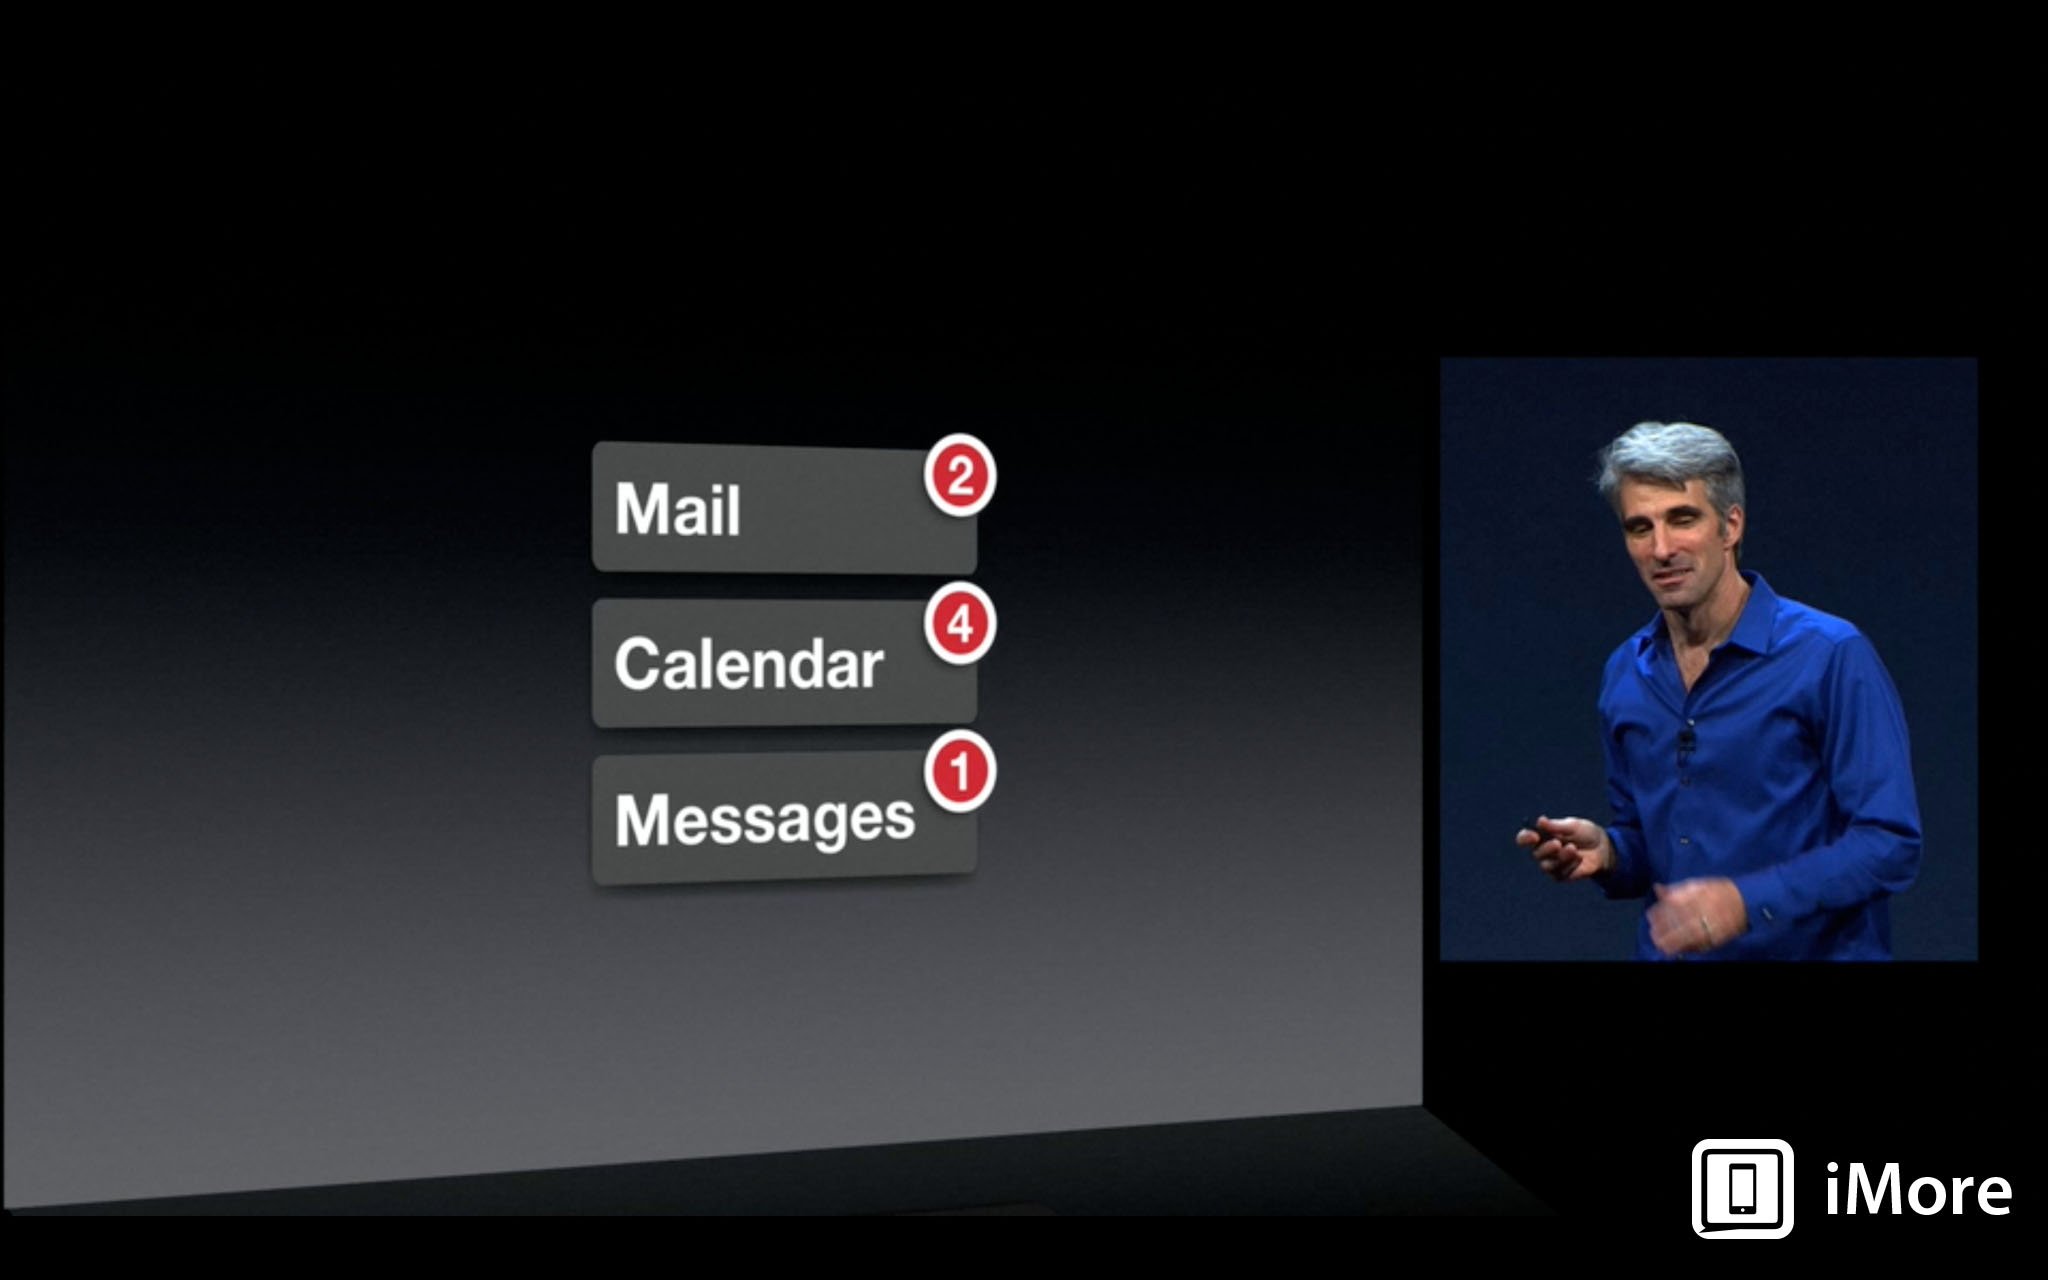 OS X Mavericks preview: Website push notifications